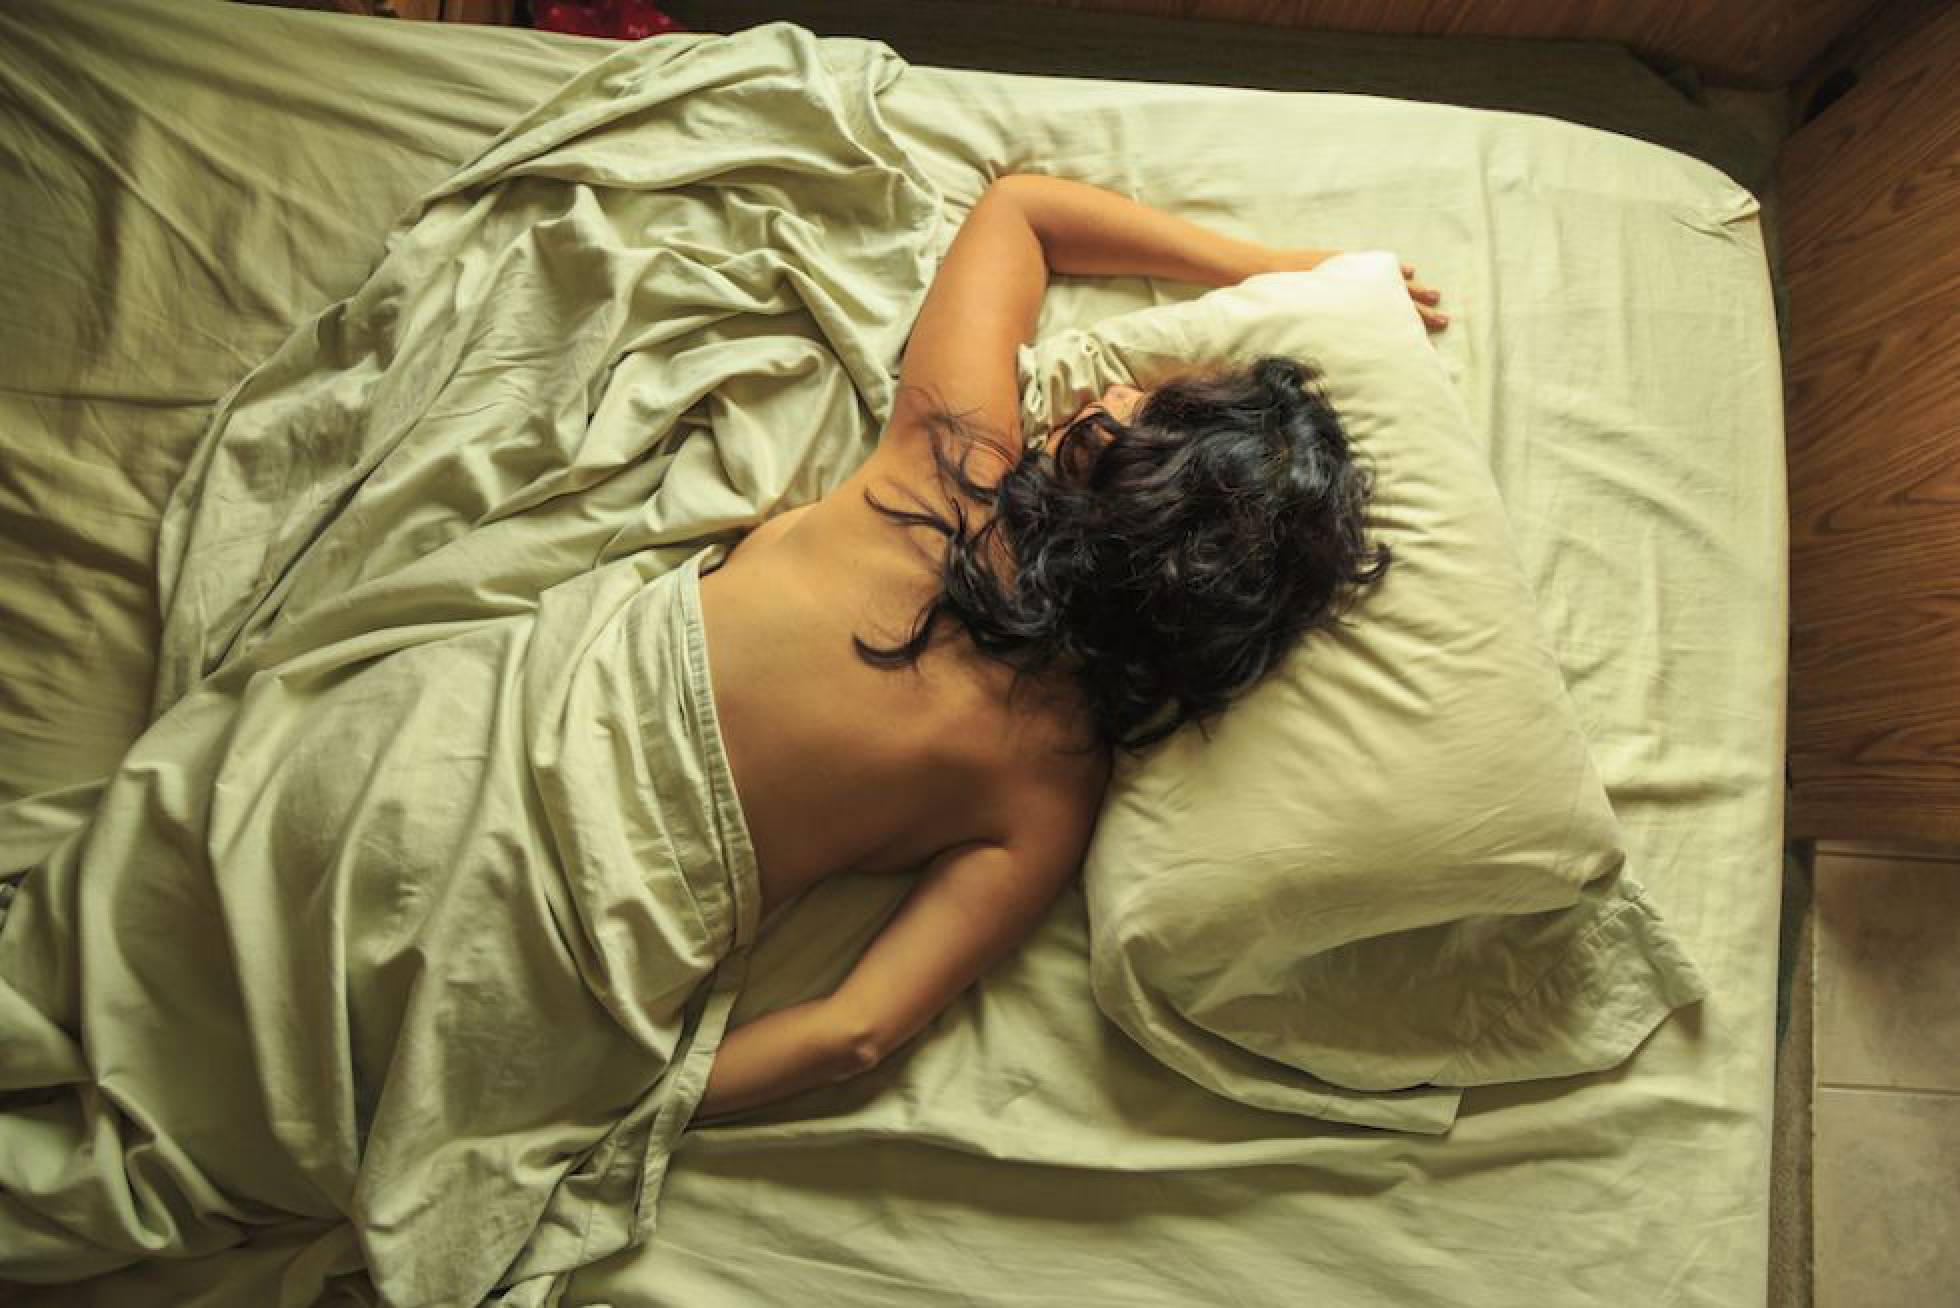 Naked Girls While Sleeping